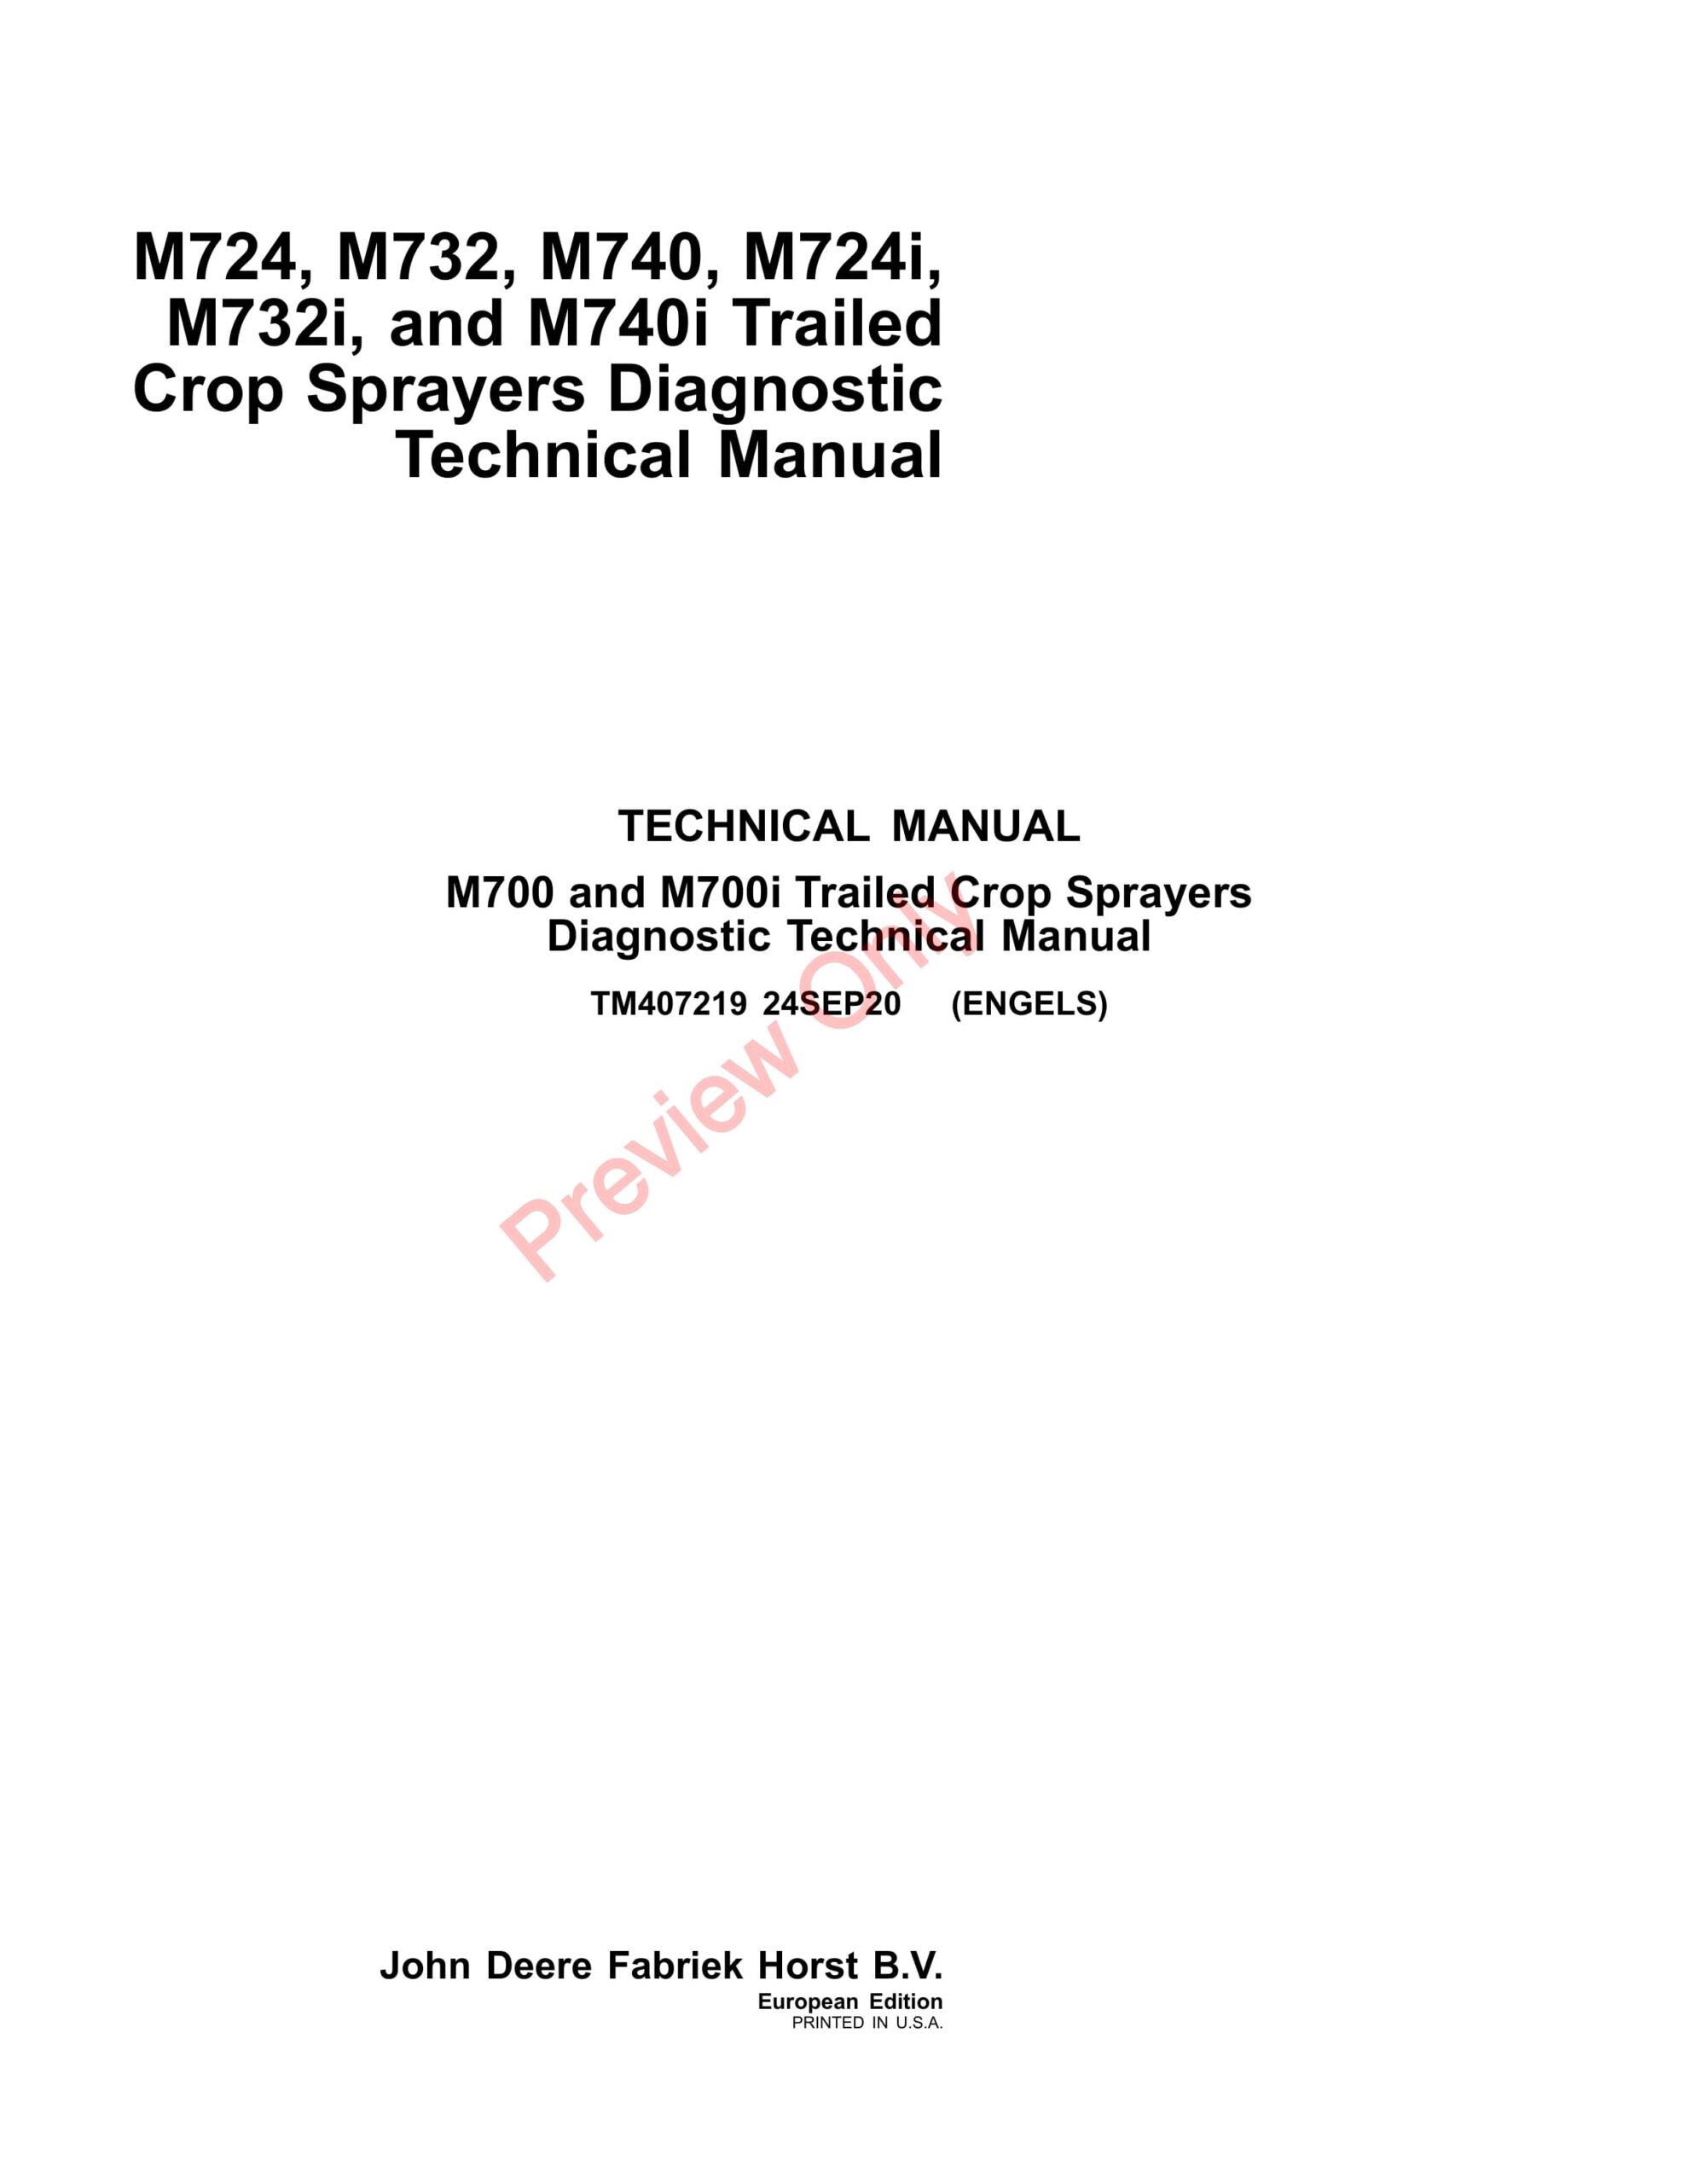 John Deere M724, M732, M740, M724i, M732i, and M740i Trailed Crop Sprayers Diagnostic Technical Manual TM407219 24SEP20-1